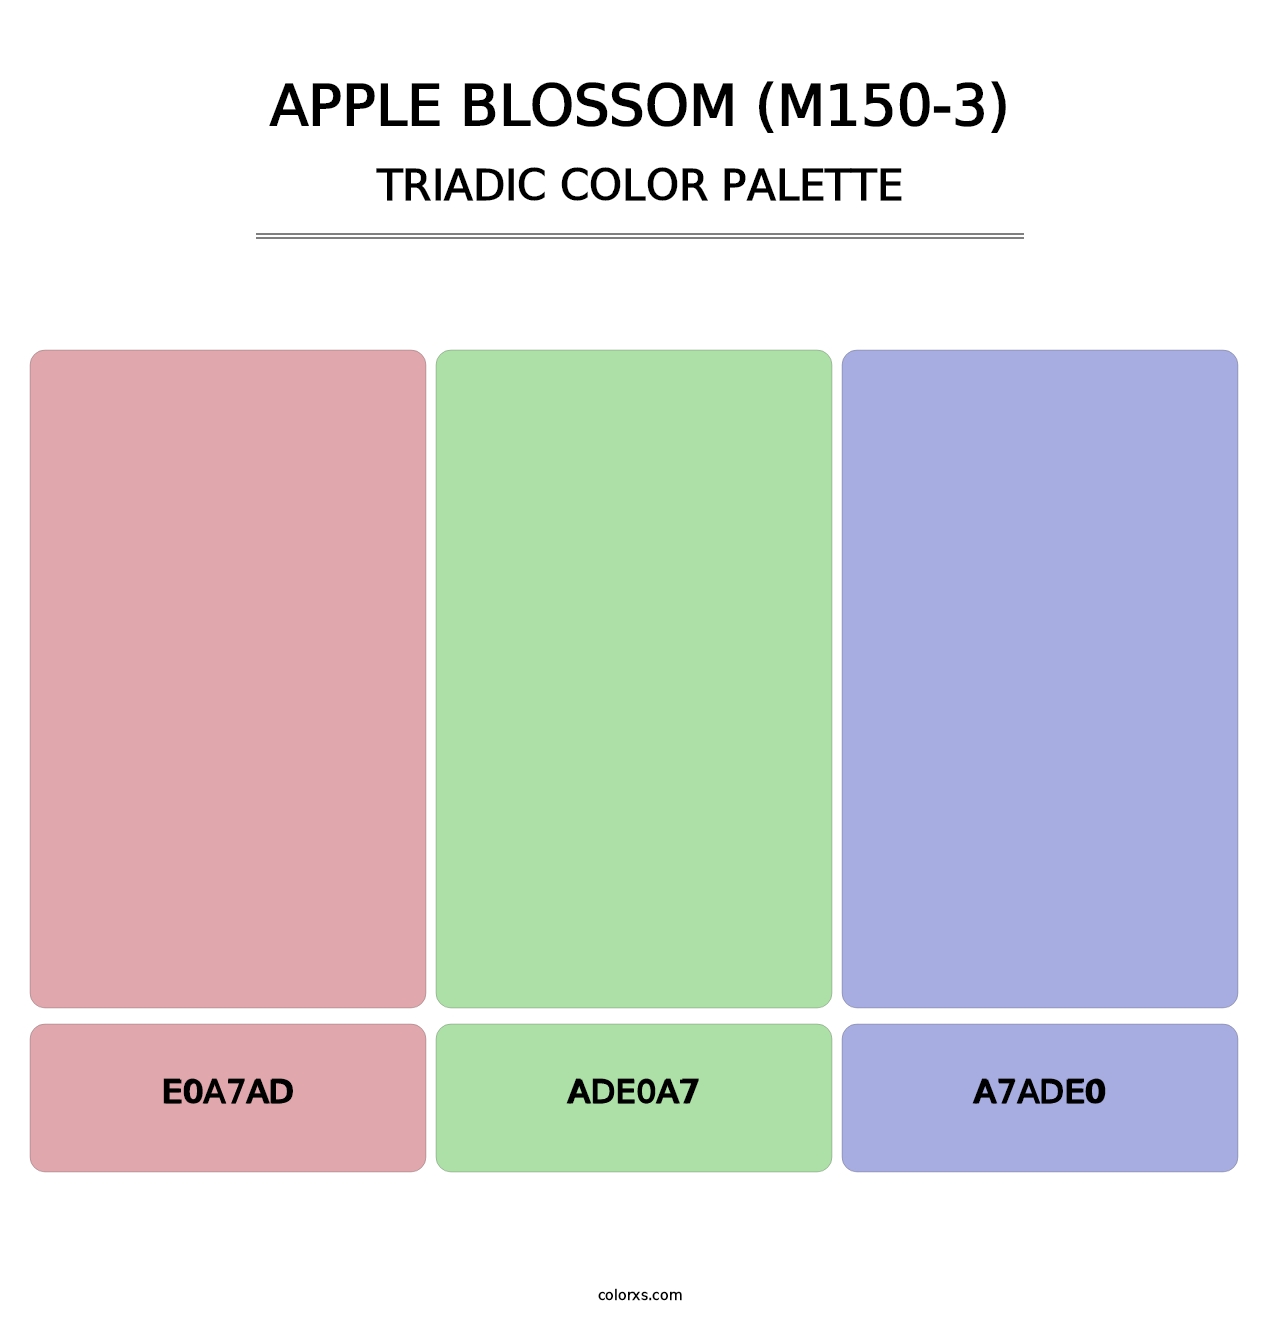 Apple Blossom (M150-3) - Triadic Color Palette